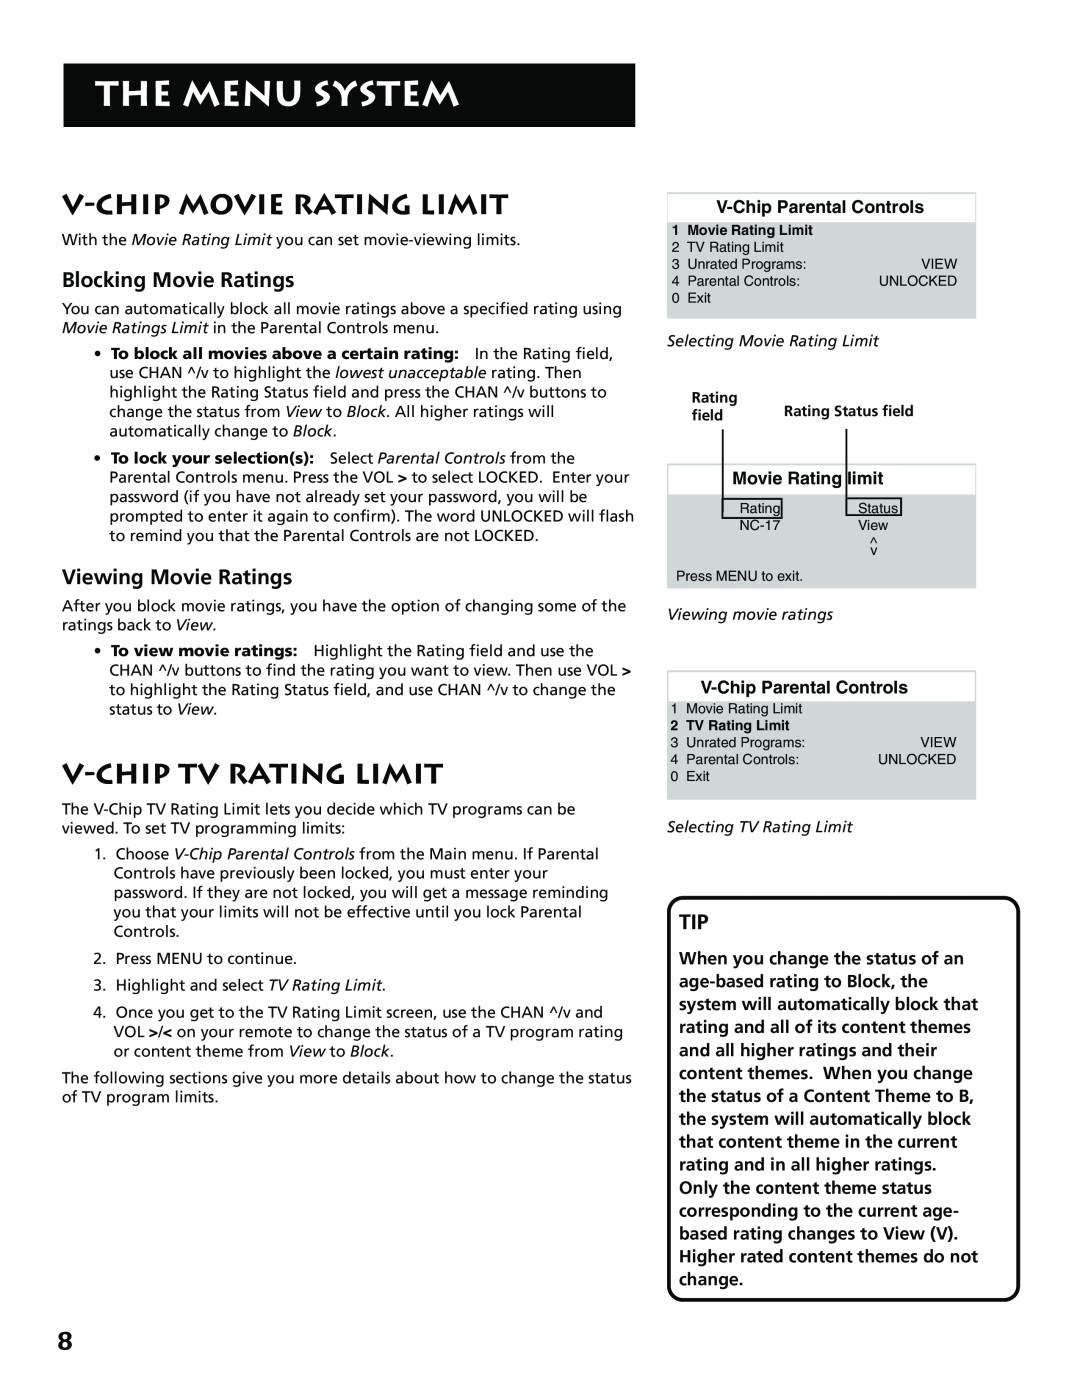 RCA E13341 manual V-Chip Movie Rating Limit, V-Chip Tv Rating Limit, Blocking Movie Ratings, Viewing Movie Ratings 